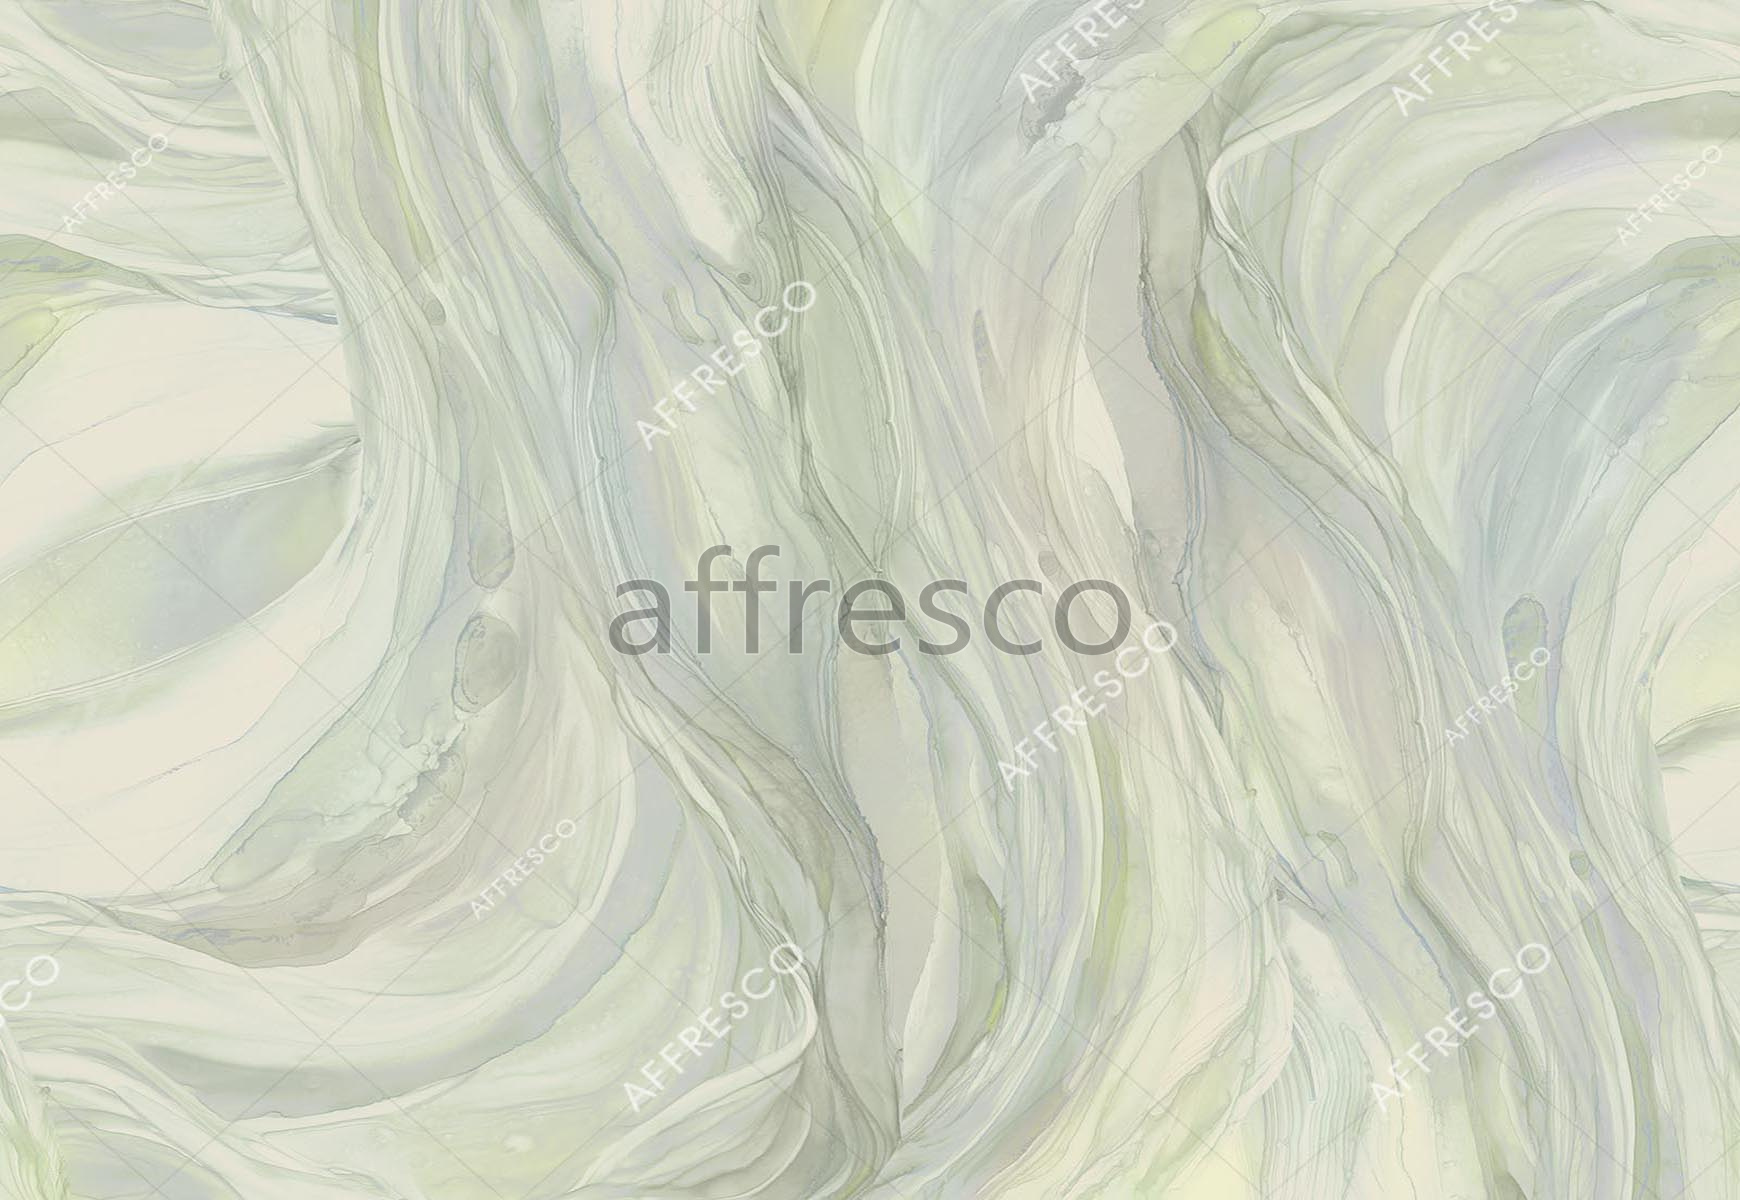 ID139057 | Fluid | stone texture | Affresco Factory